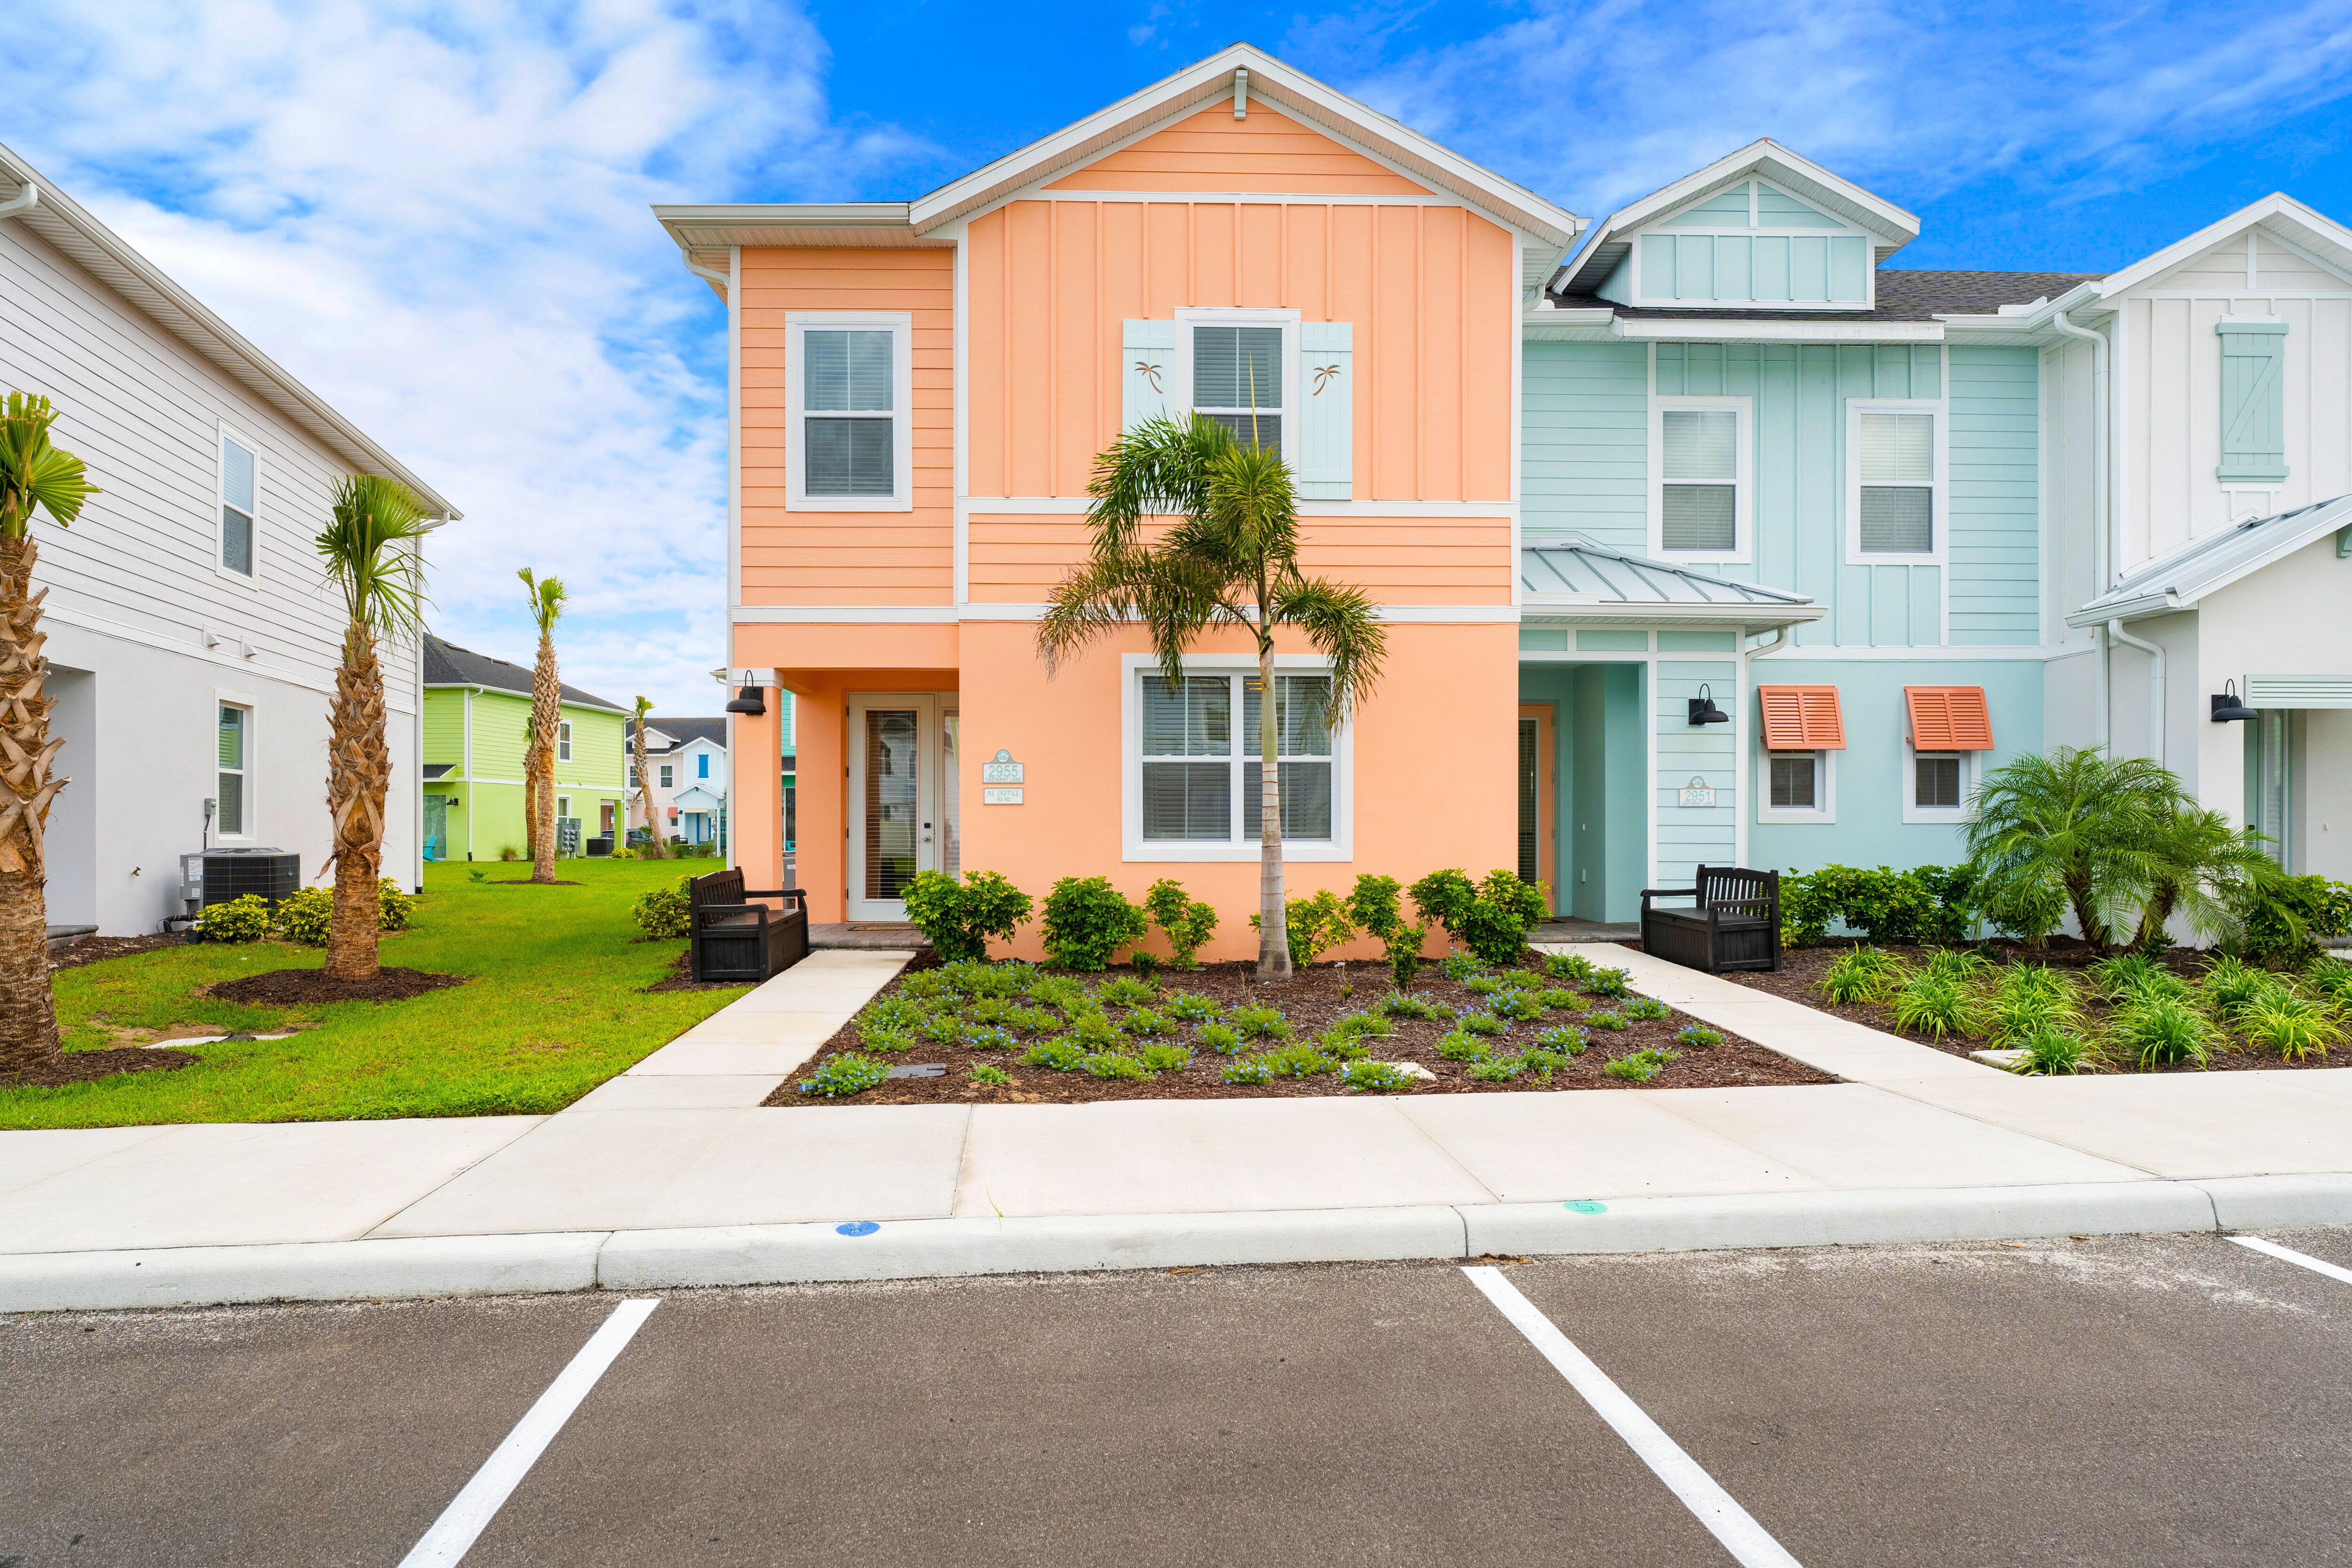 Property Image 1 - Orange Bliss Villa near Disney with Margaritaville Resort Access - 2955CL